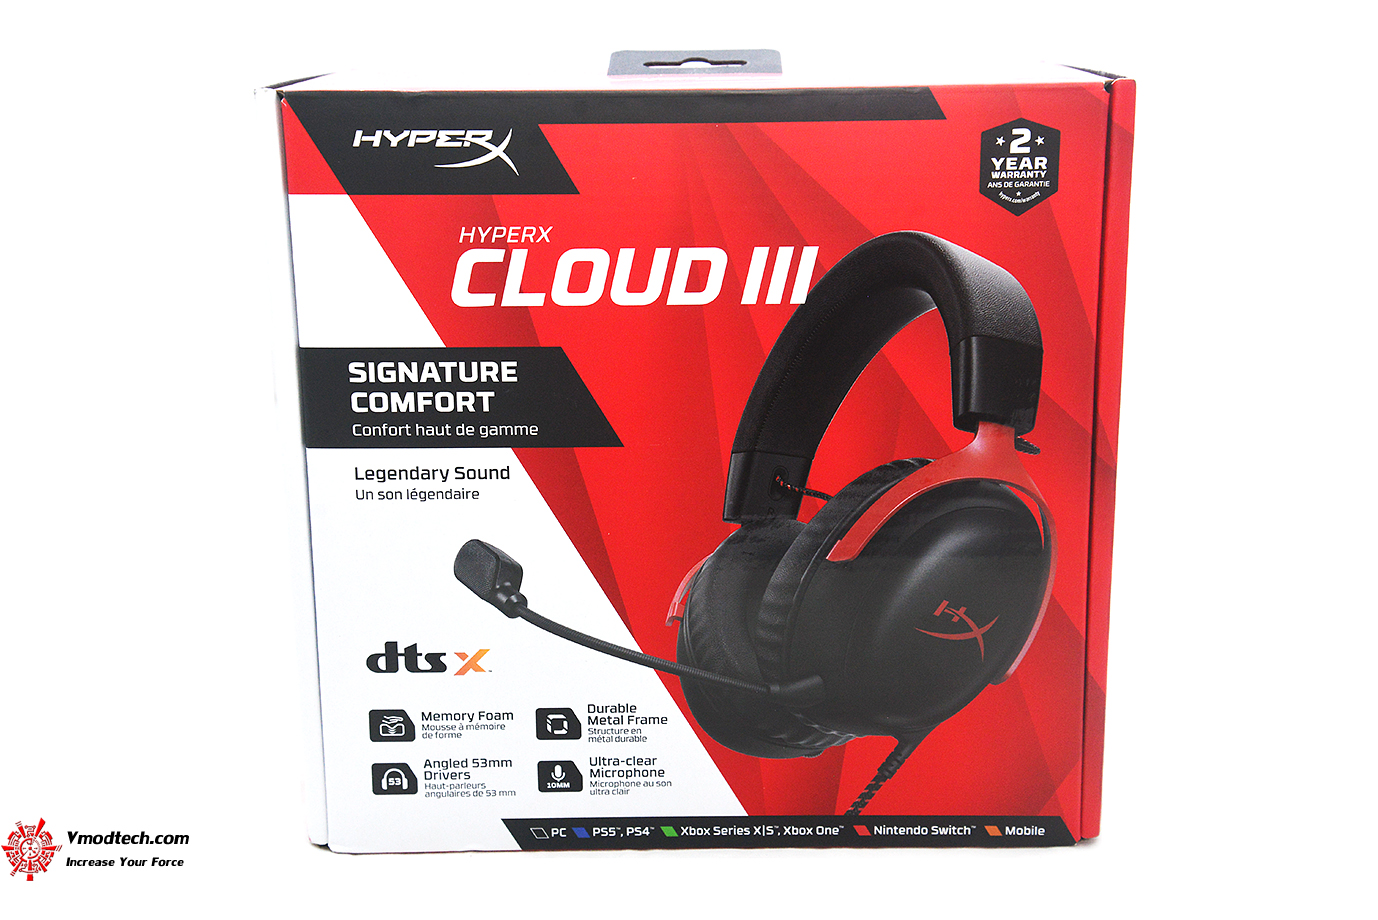 dsc 0665 HyperX Cloud III Gaming Headset Review